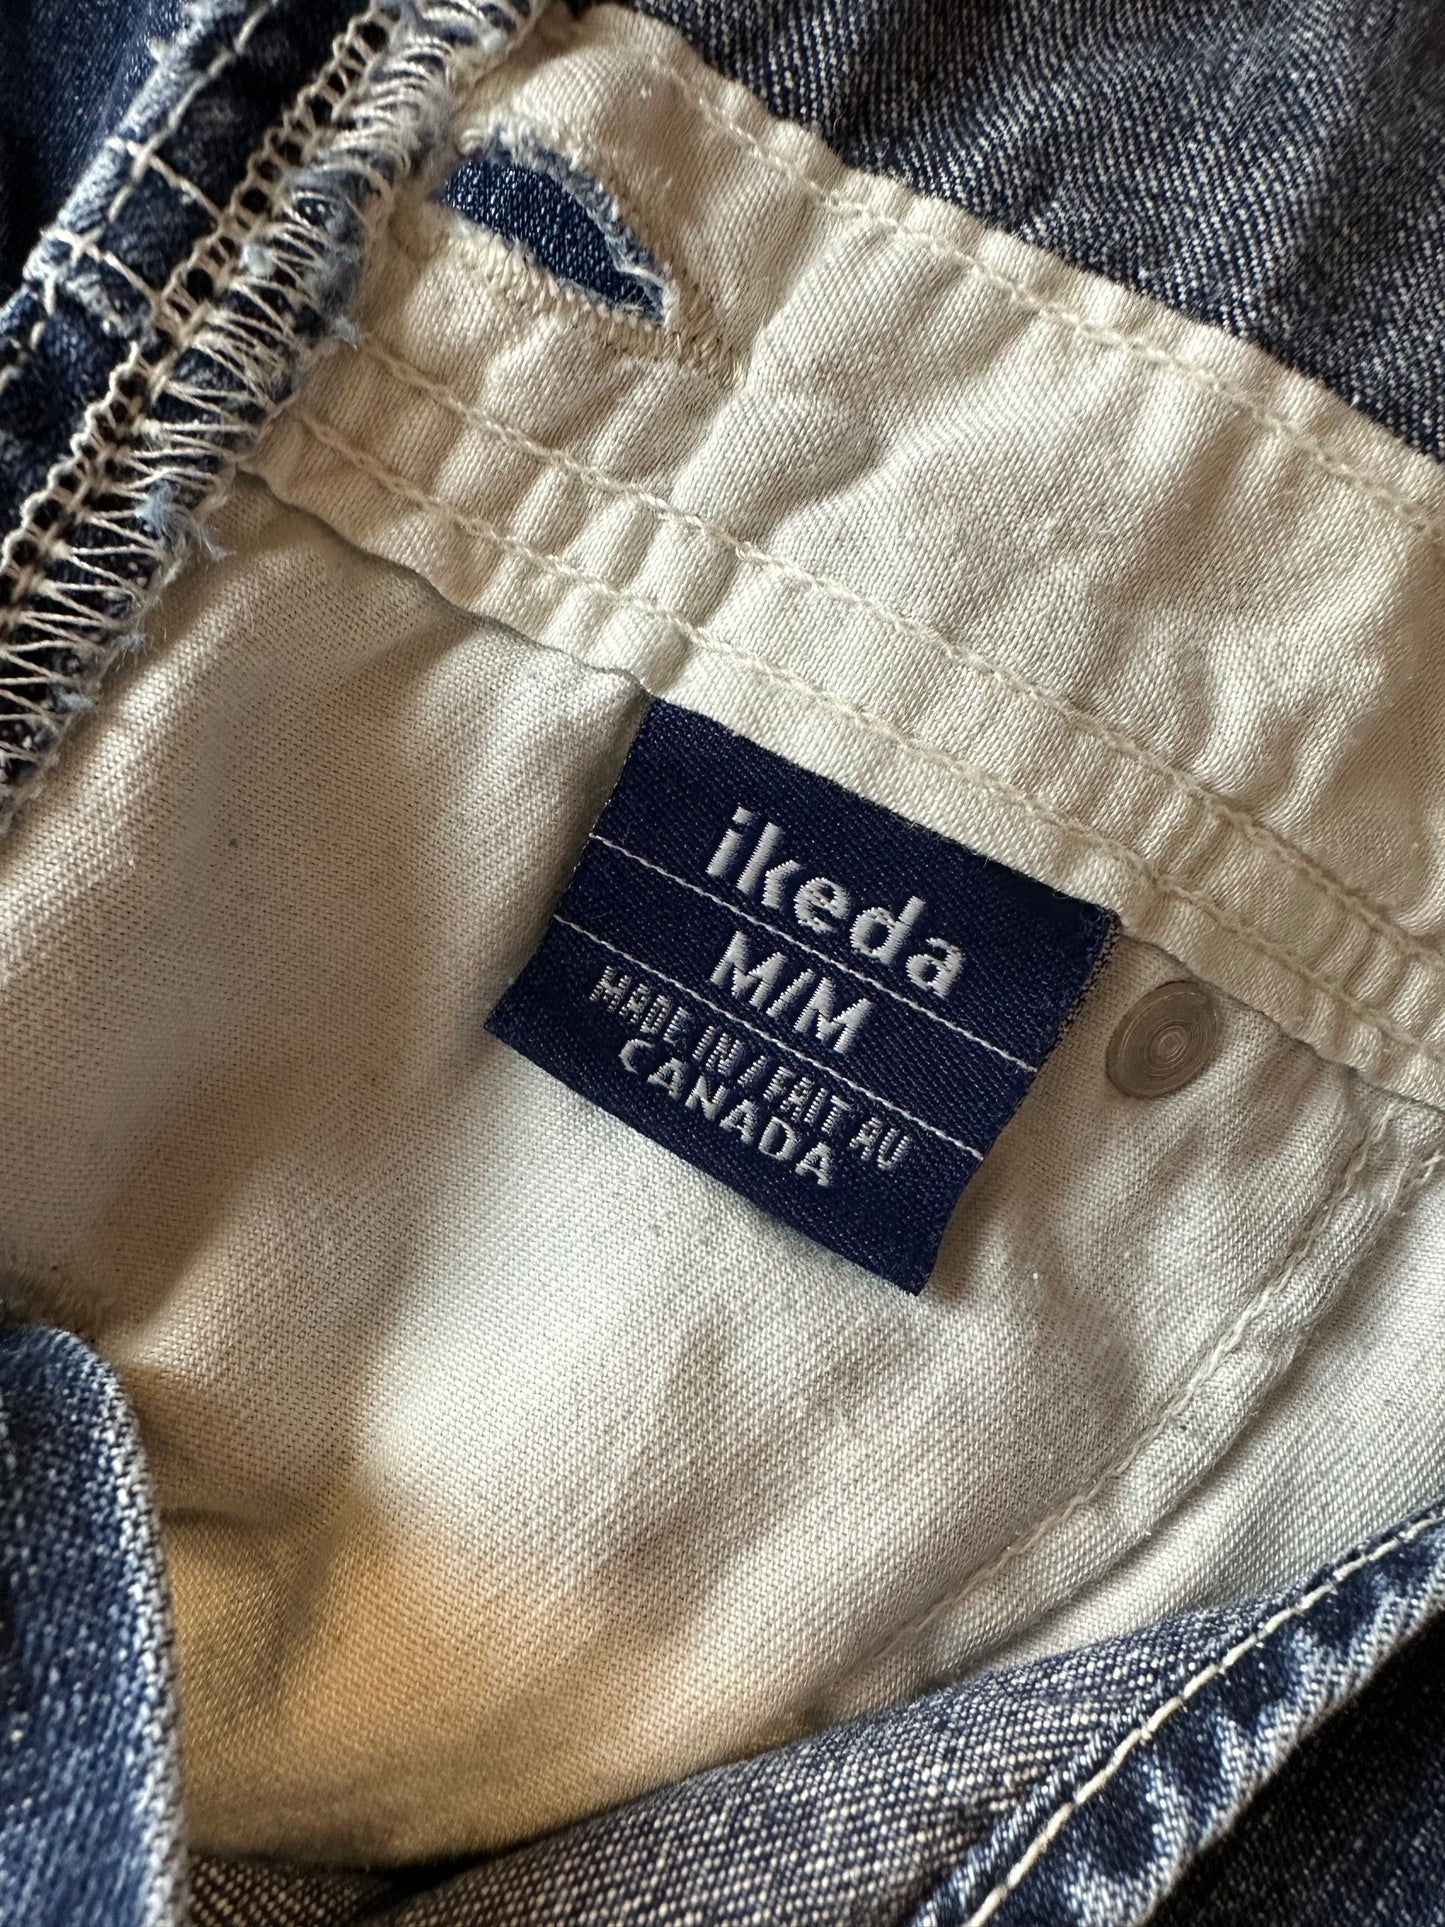 90s 'Ikeda' Overall Shorts / Medium